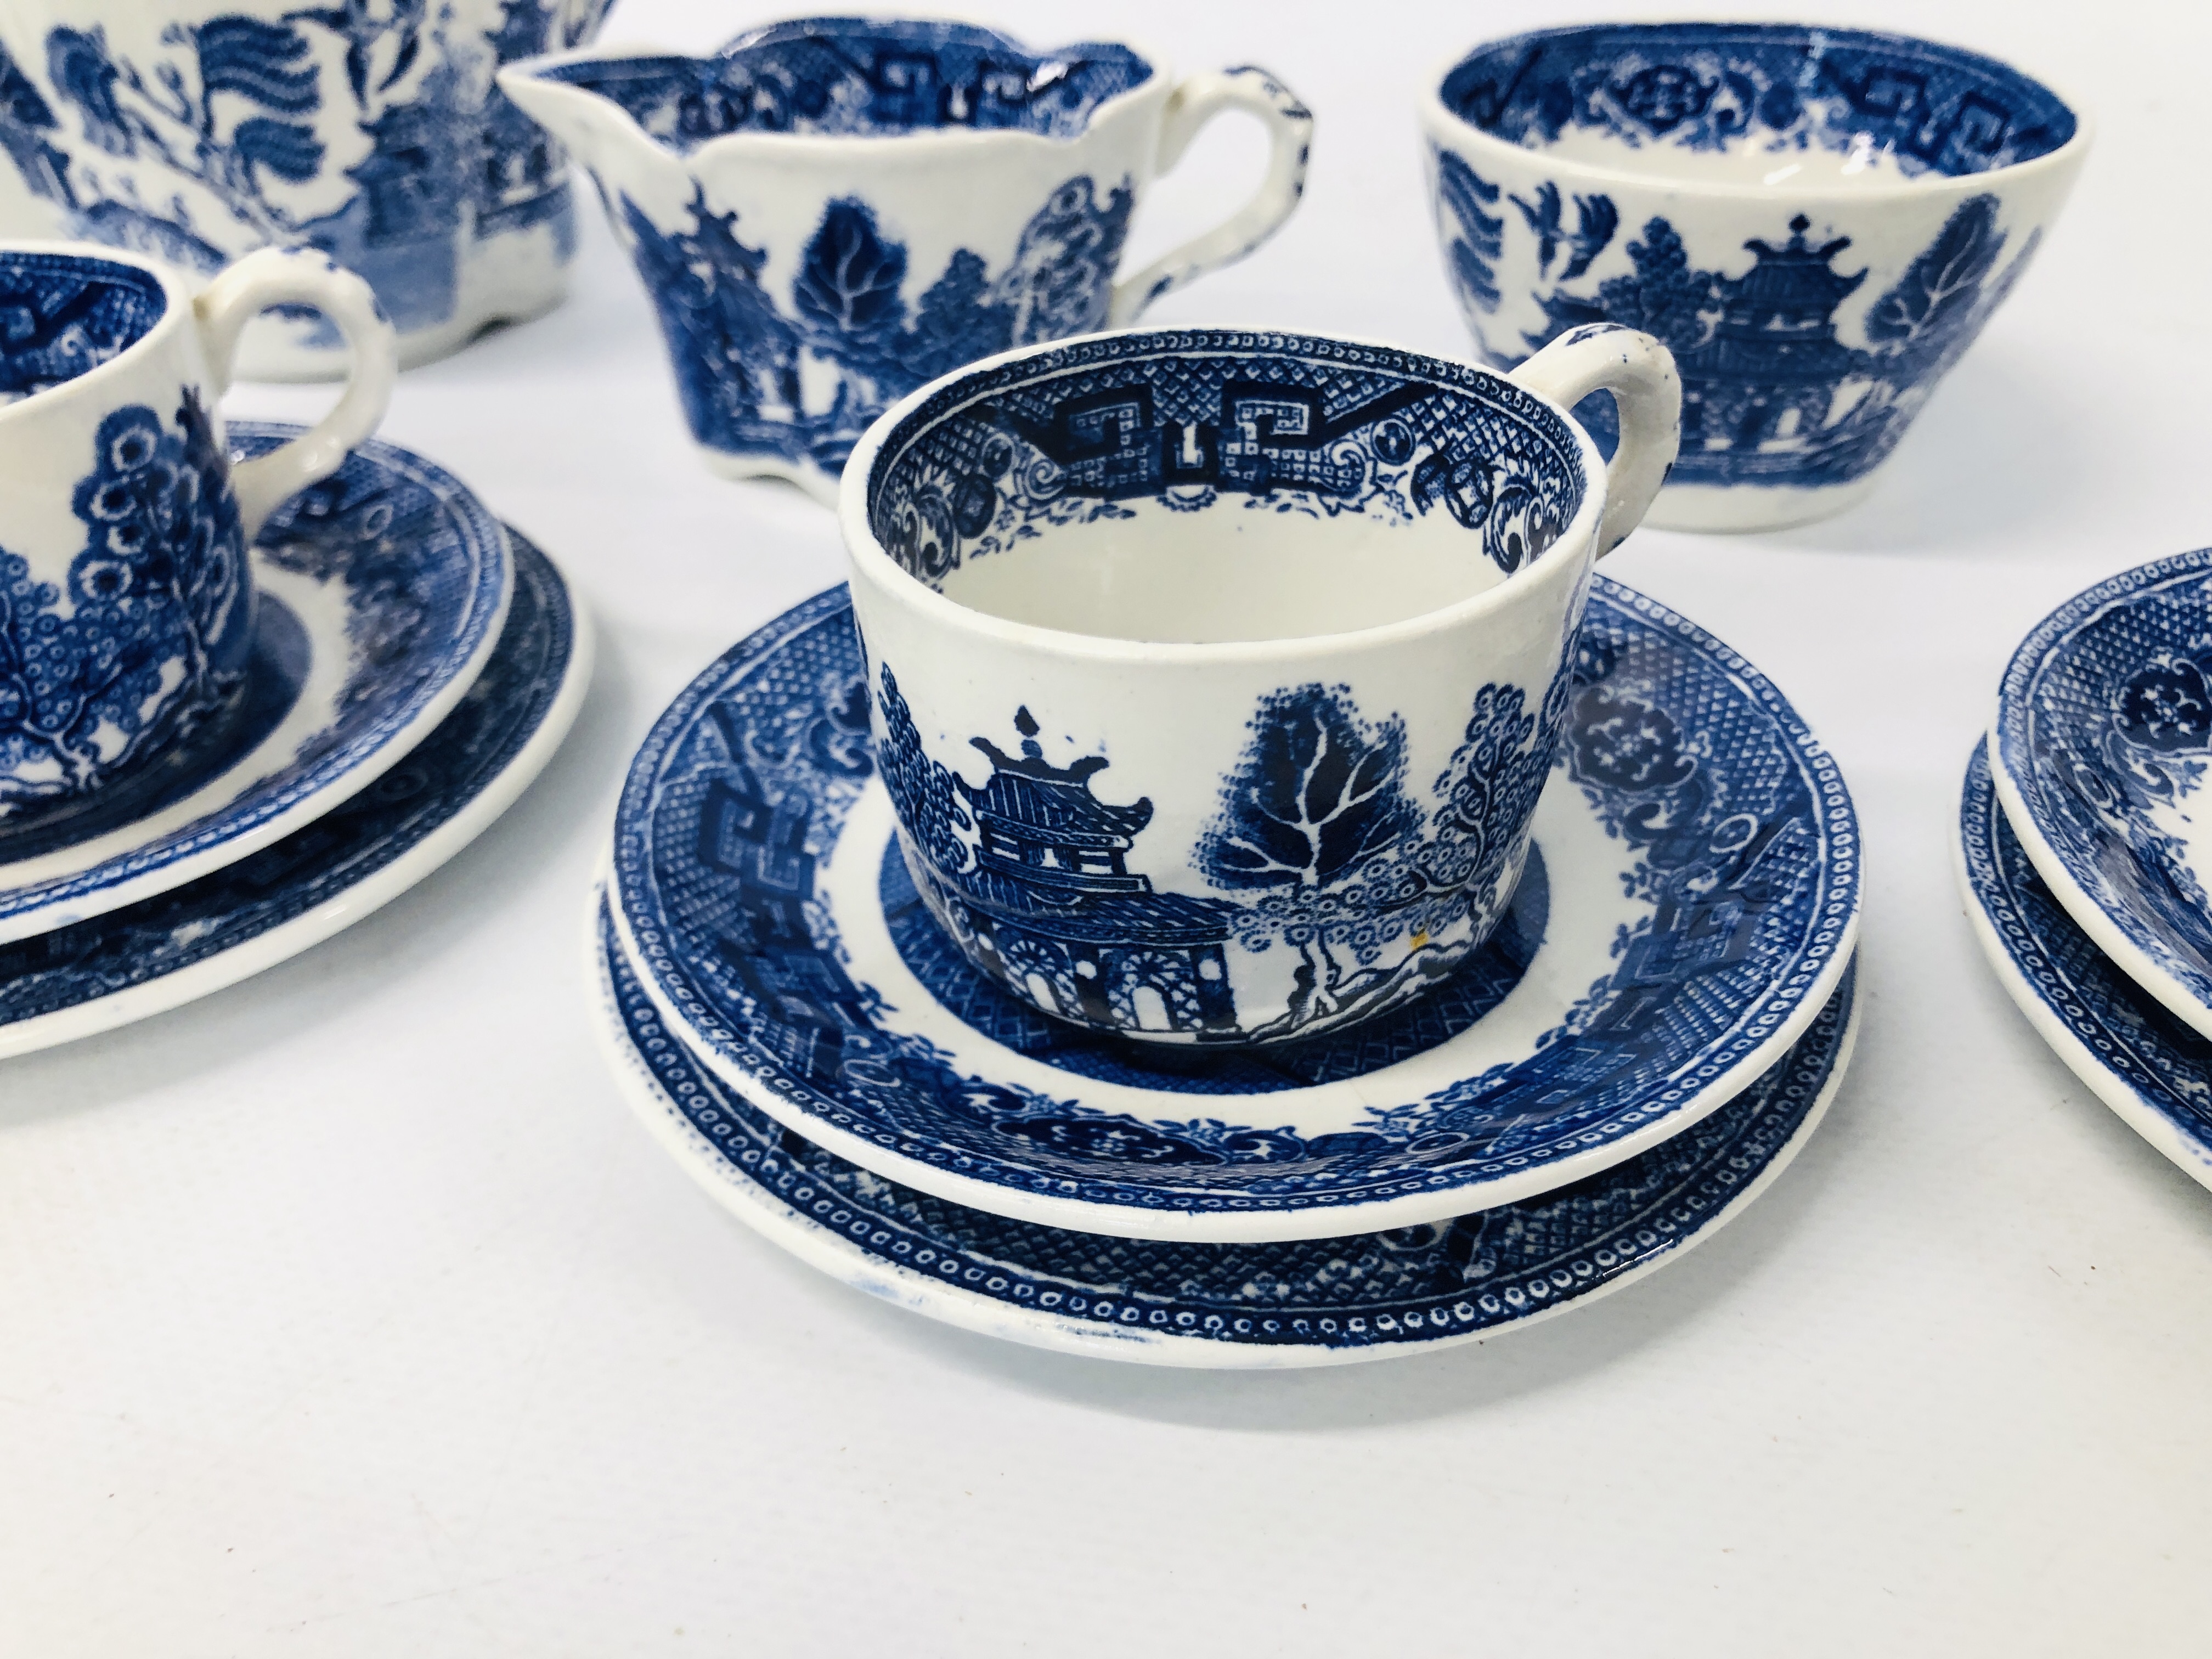 VINTAGE MINATURE 15 PIECE BLUE AND WHITE WILLOW PATTERN TEA SET MARKED RIDGWAY 1832 SEMI CHINA. - Image 3 of 8